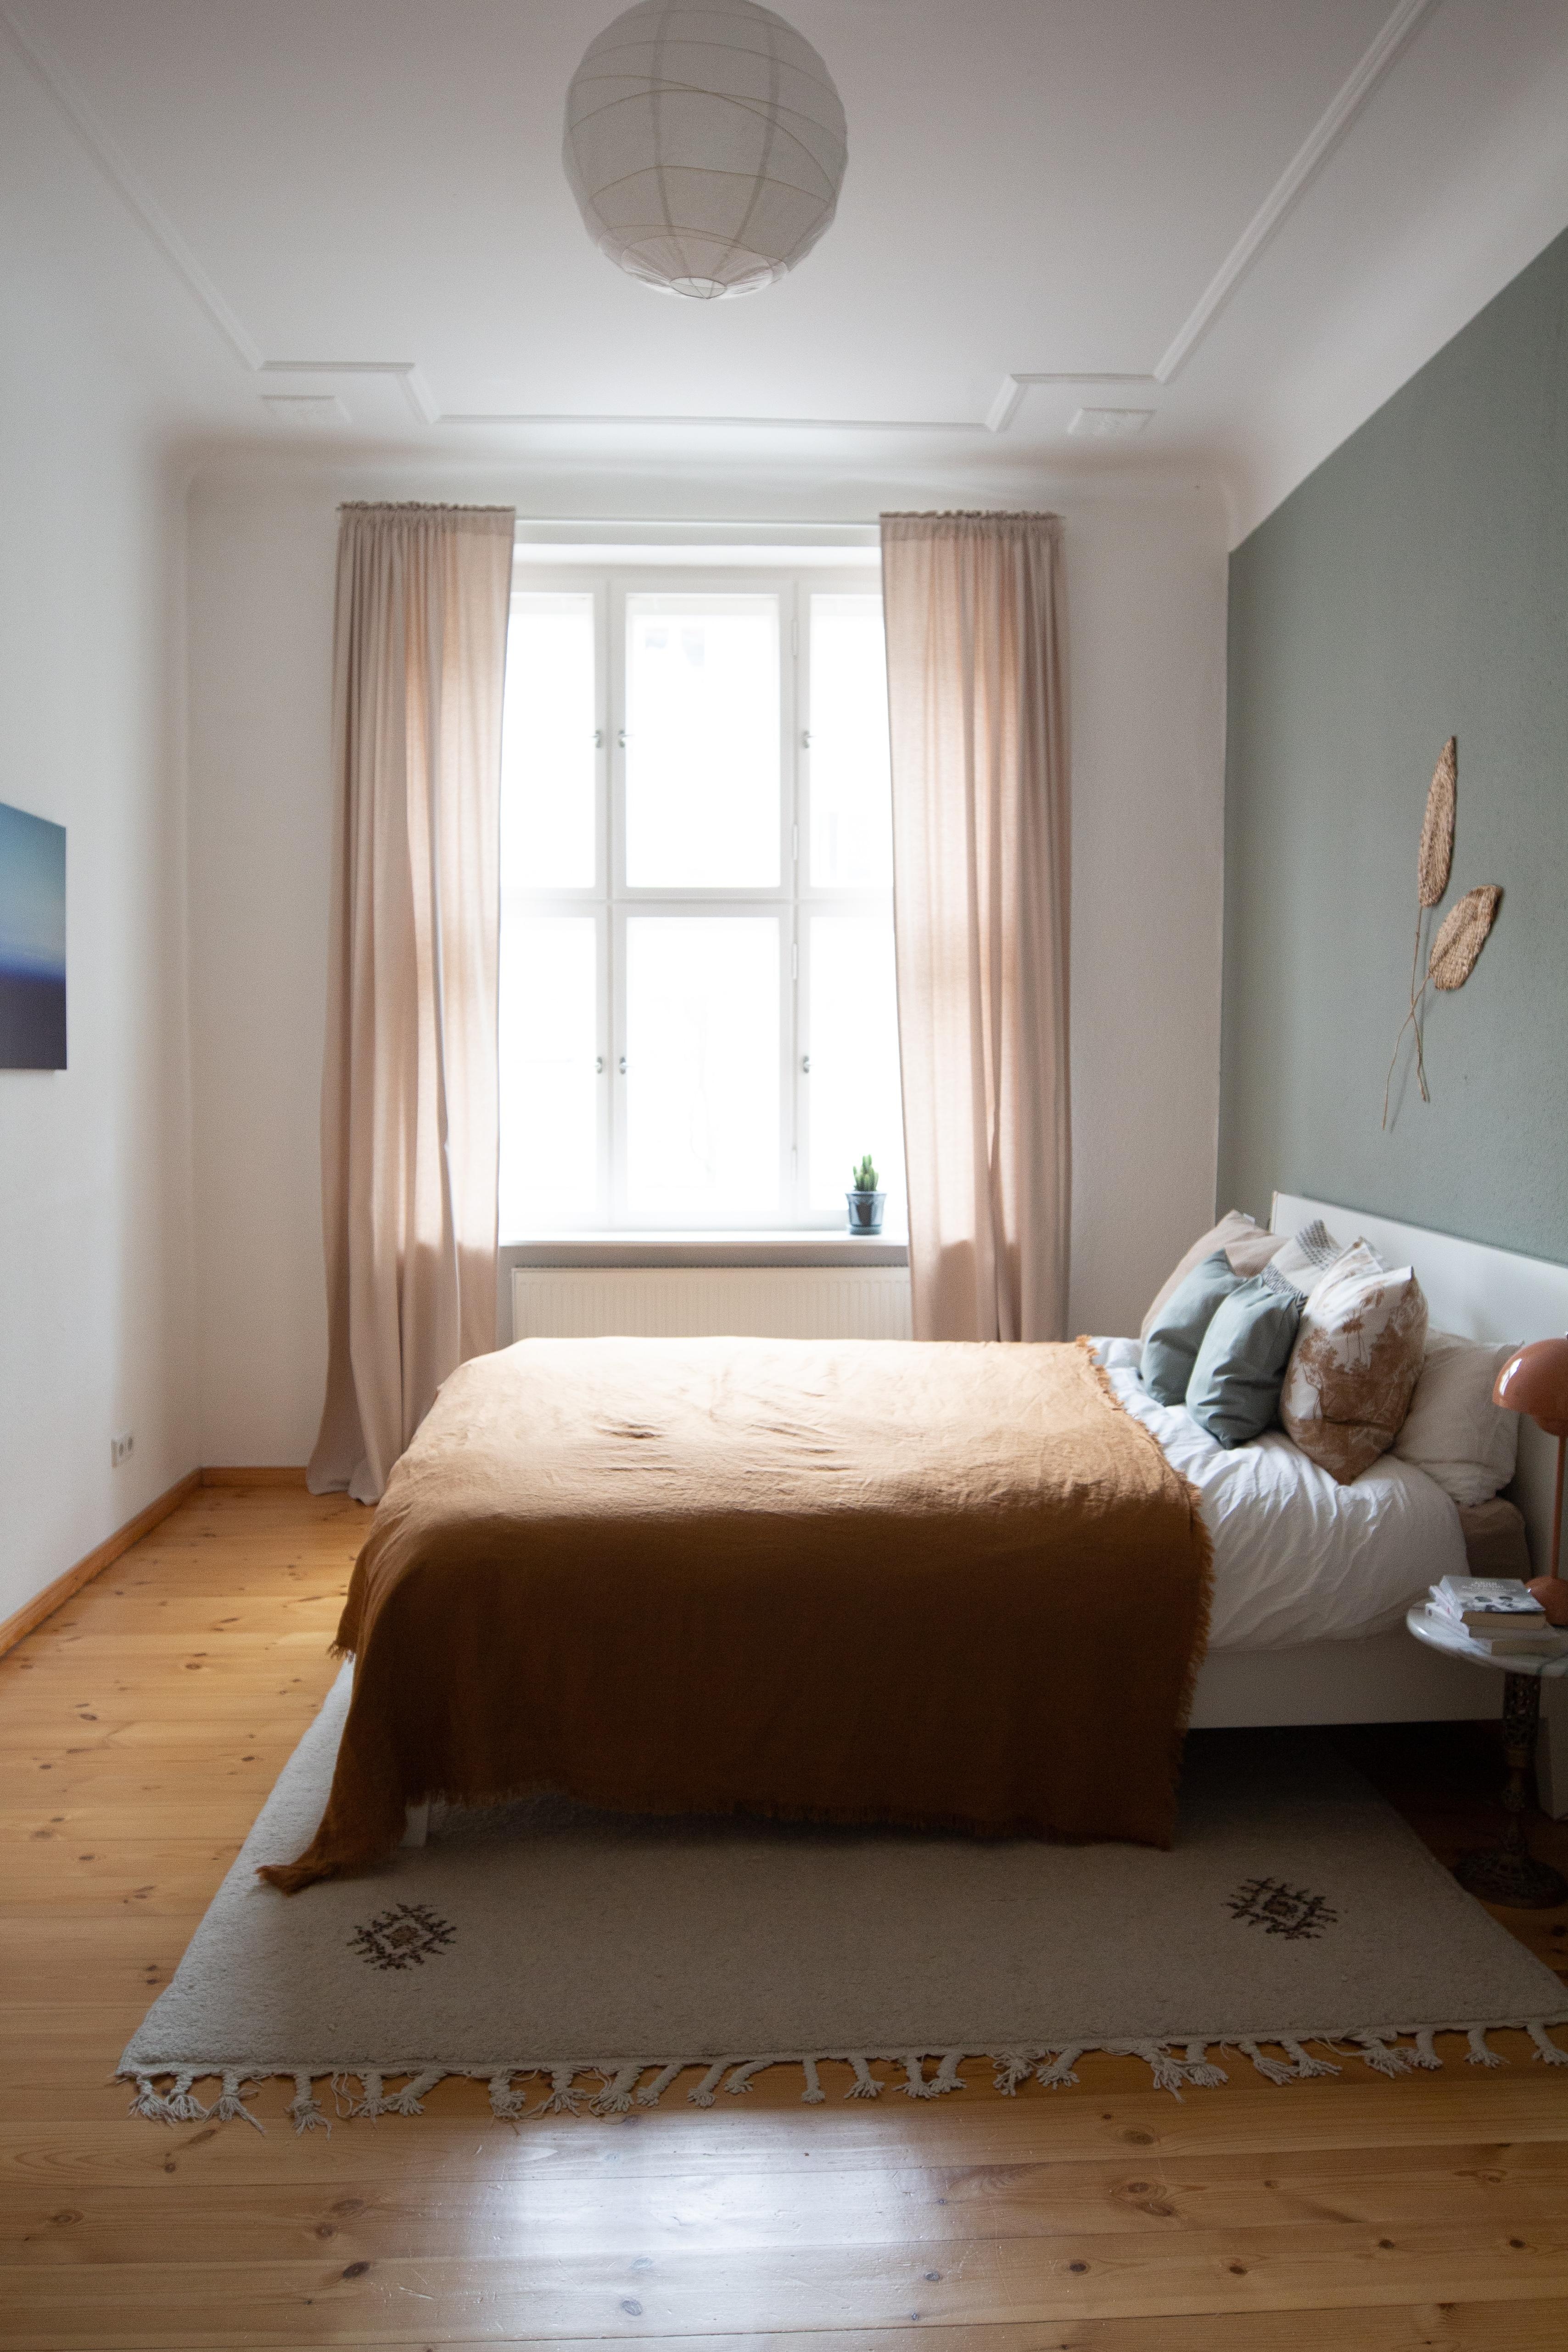 Manchmal hat es auch was, das Licht an grauen Tagen :)
#bedroom #altbau #interiorstyling #bedroomstyling #bedroomideas